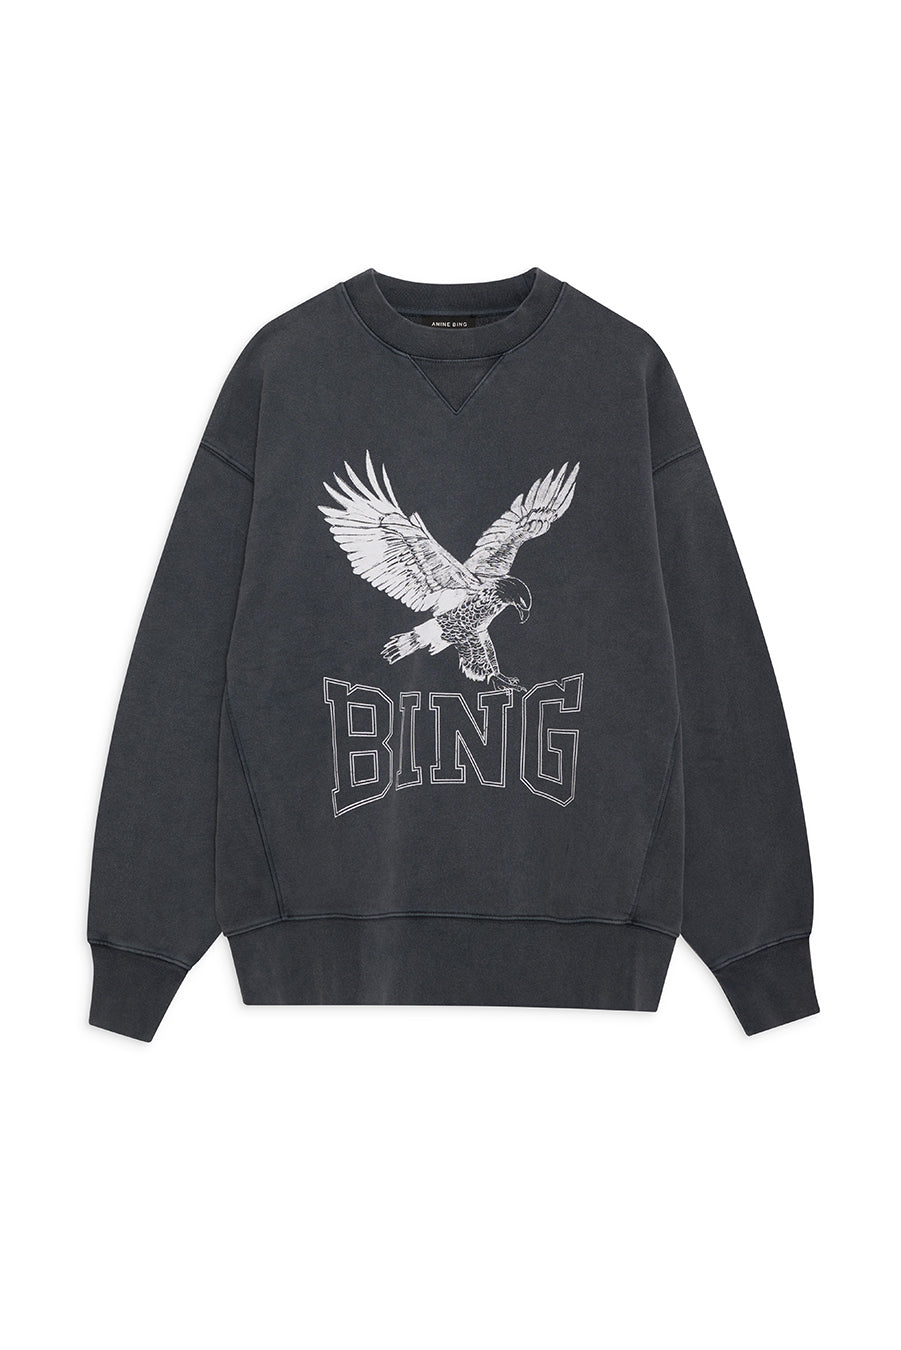 Anine Bing - Alto Sweatshirt Retro Eagle in Washed Black